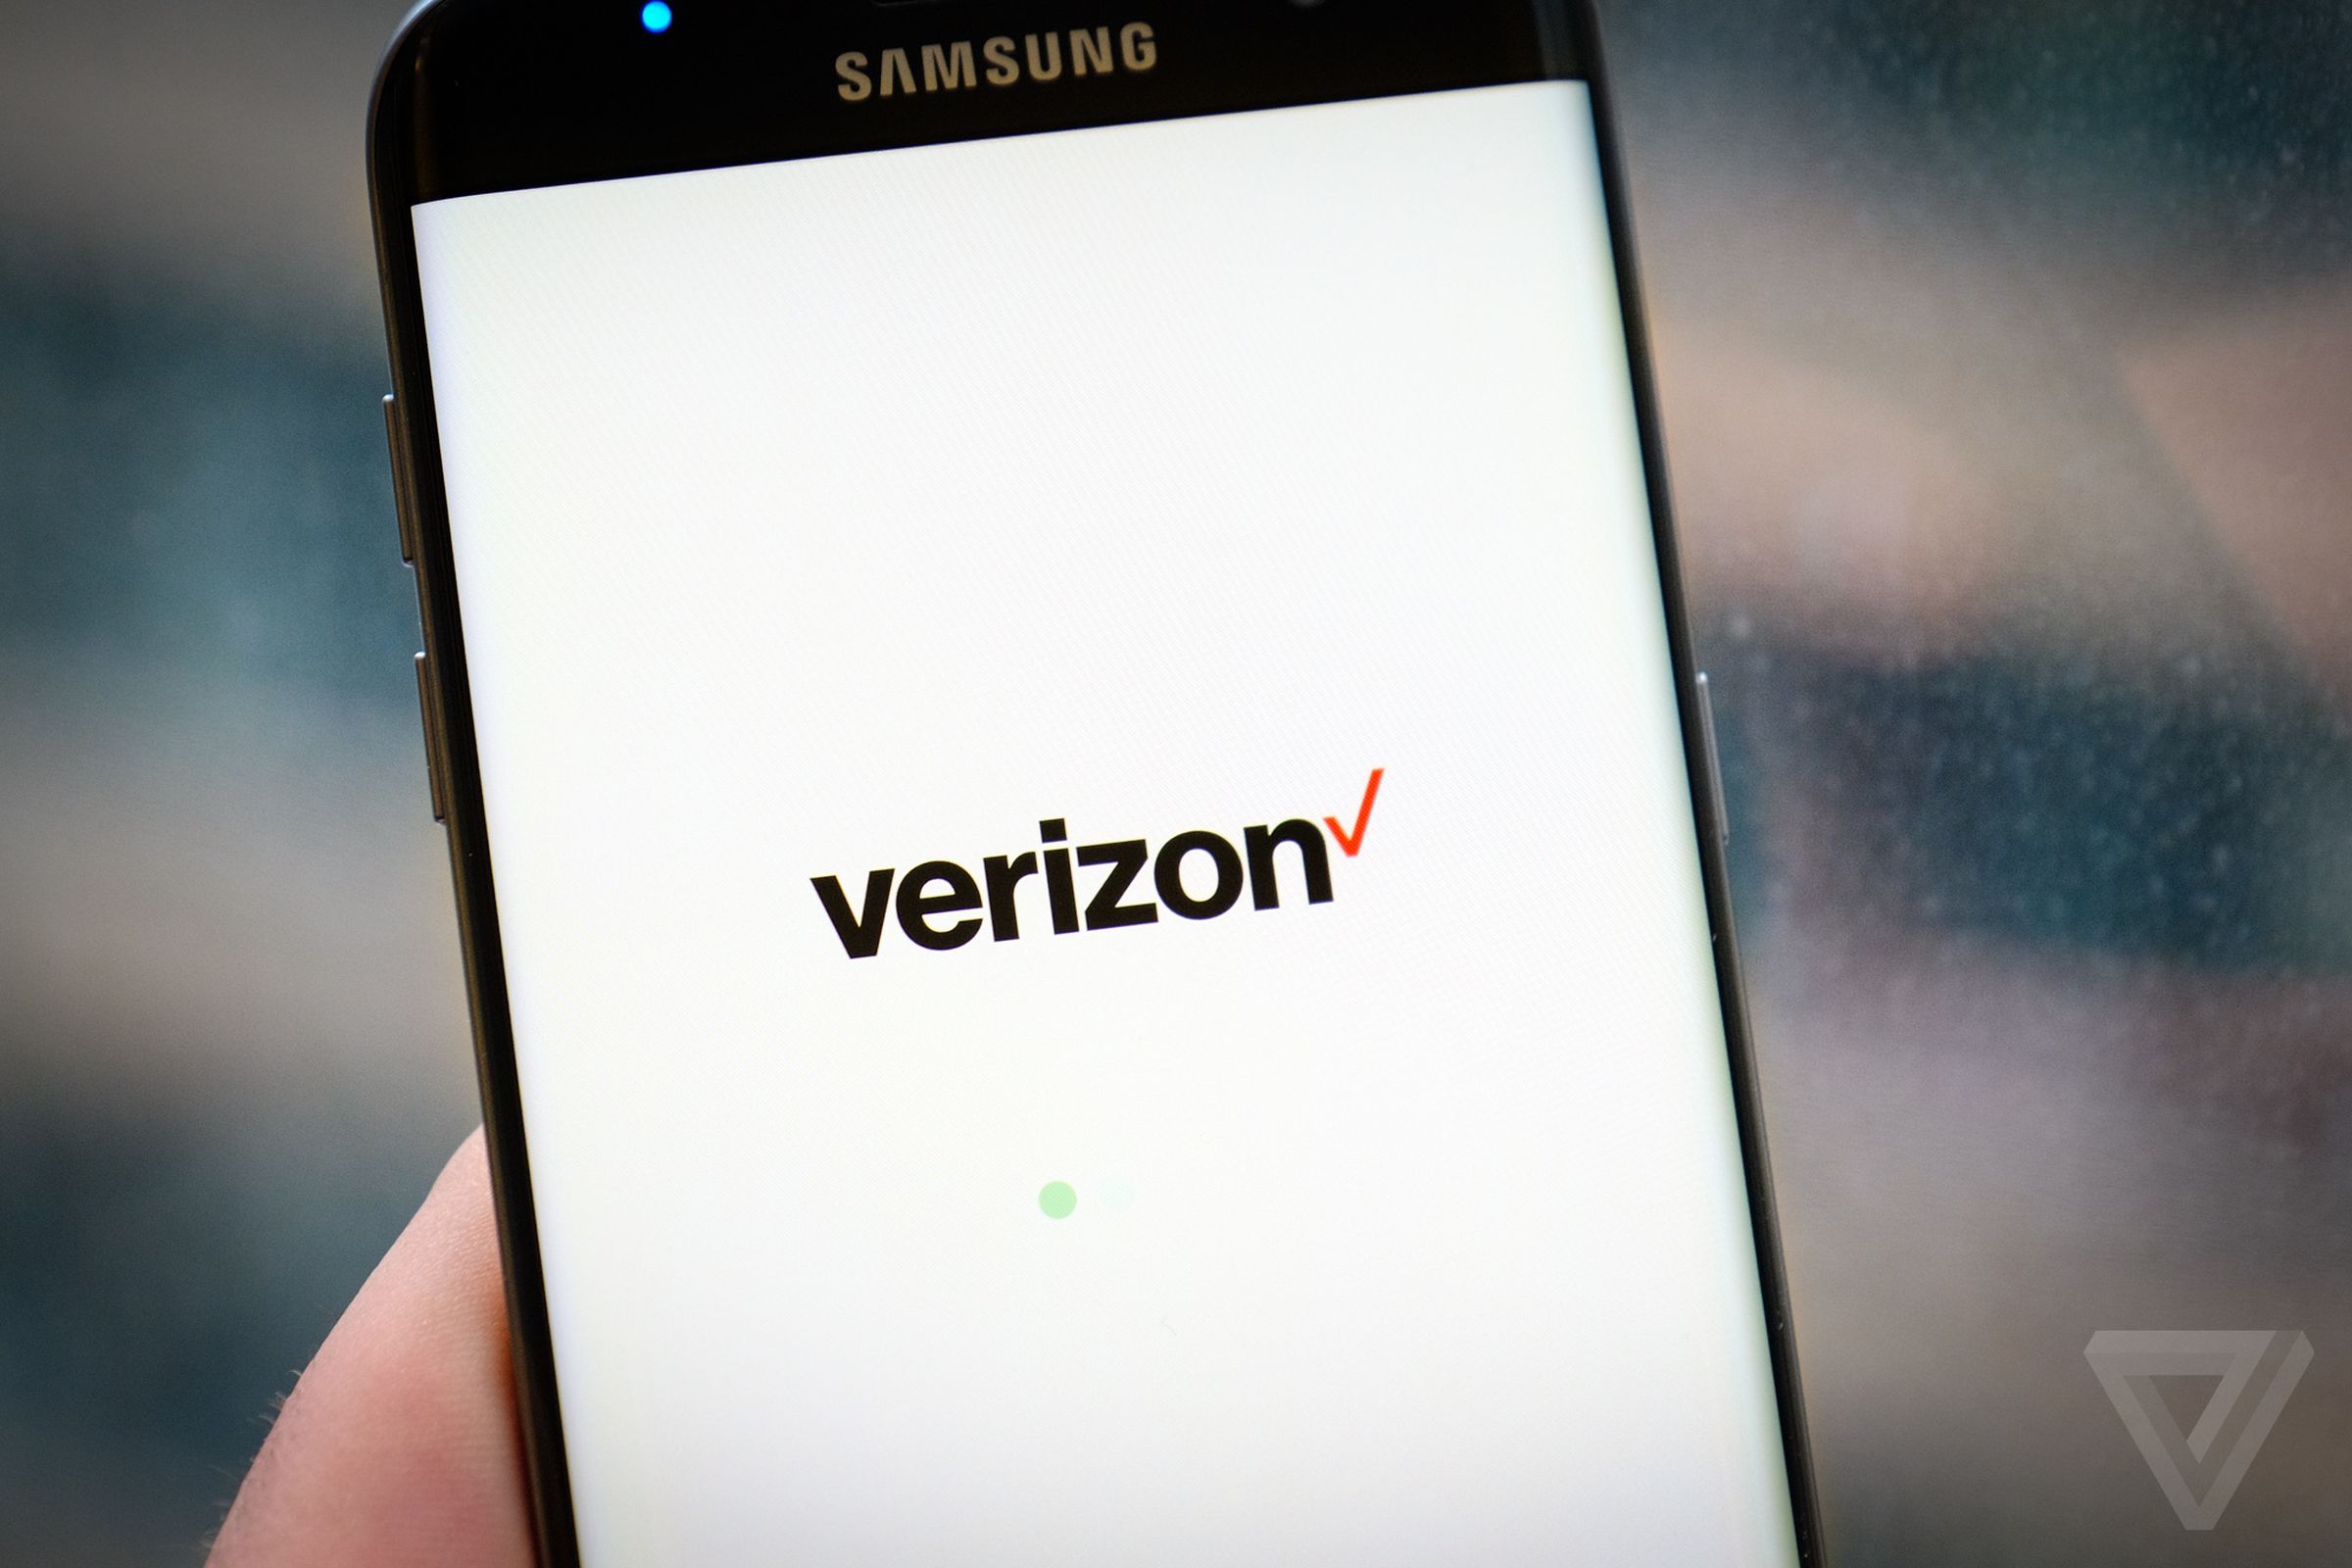 Verizon new logo stock